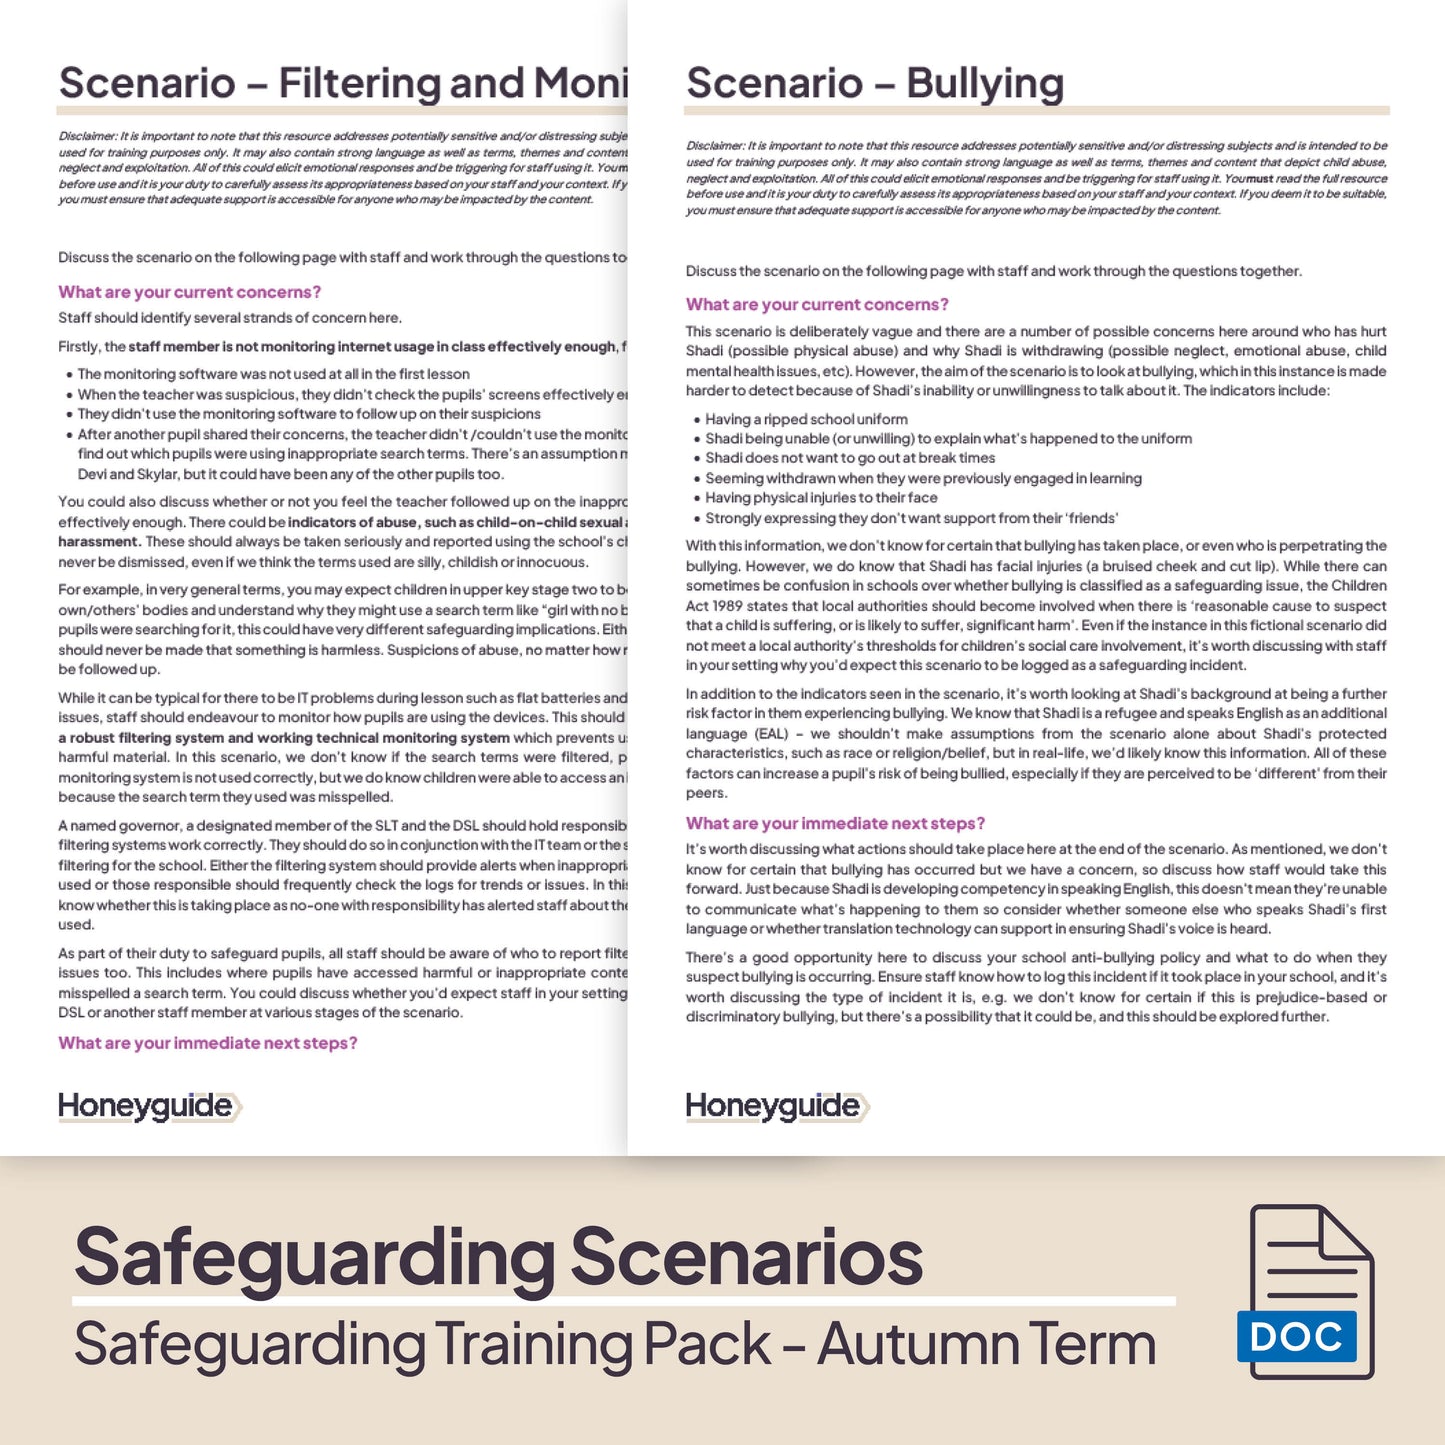 Safeguarding Training Pack - Autumn Term